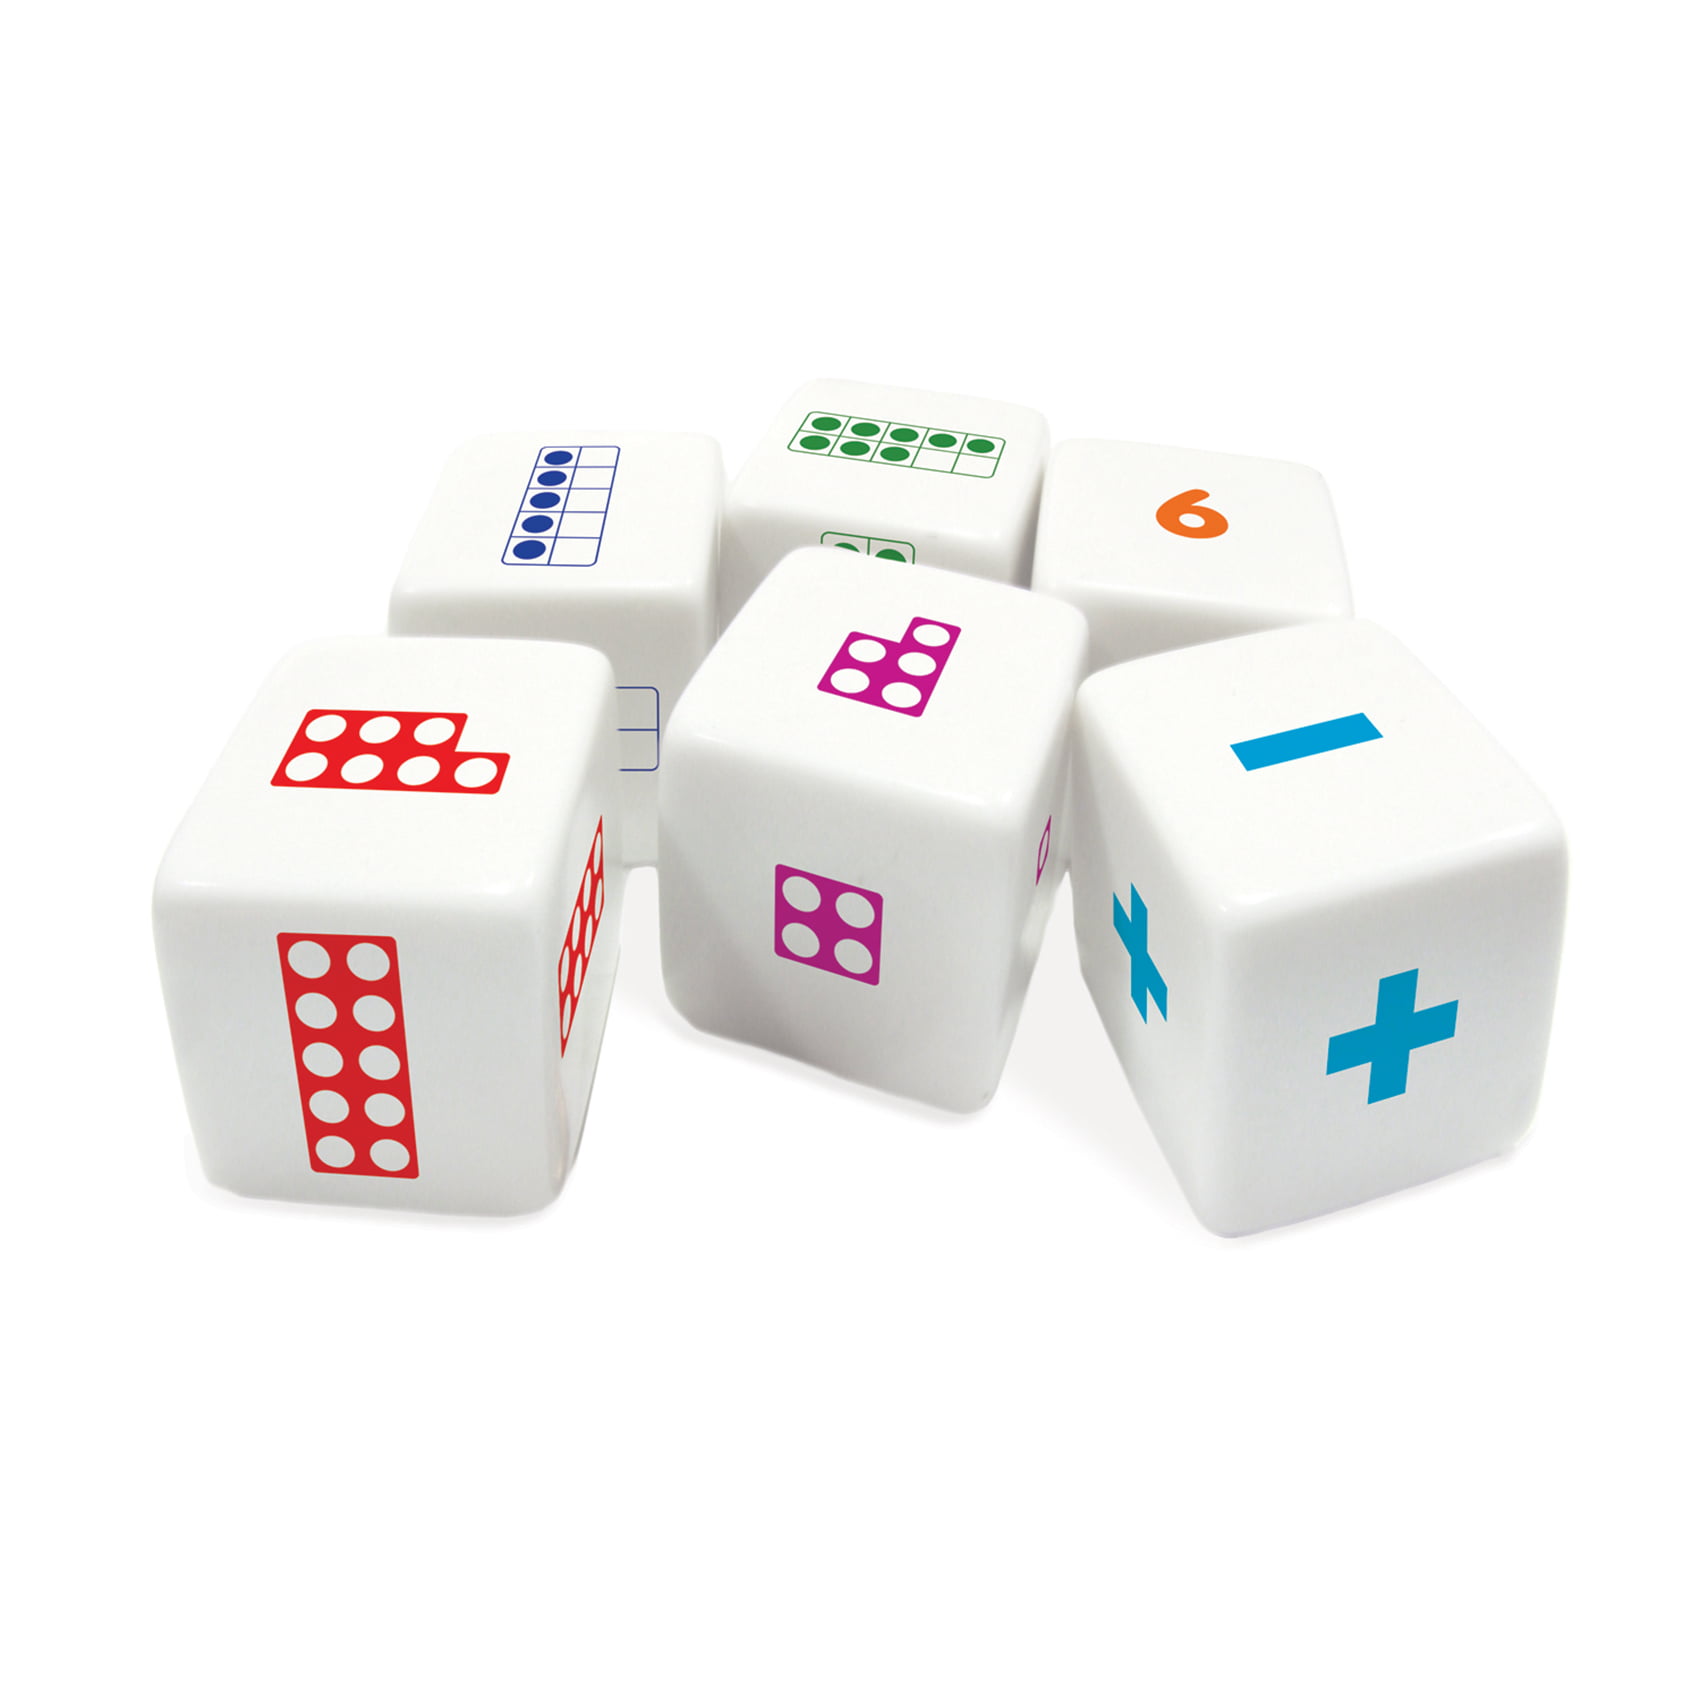 junior-learning-number-dice-educational-learning-game-brickseek